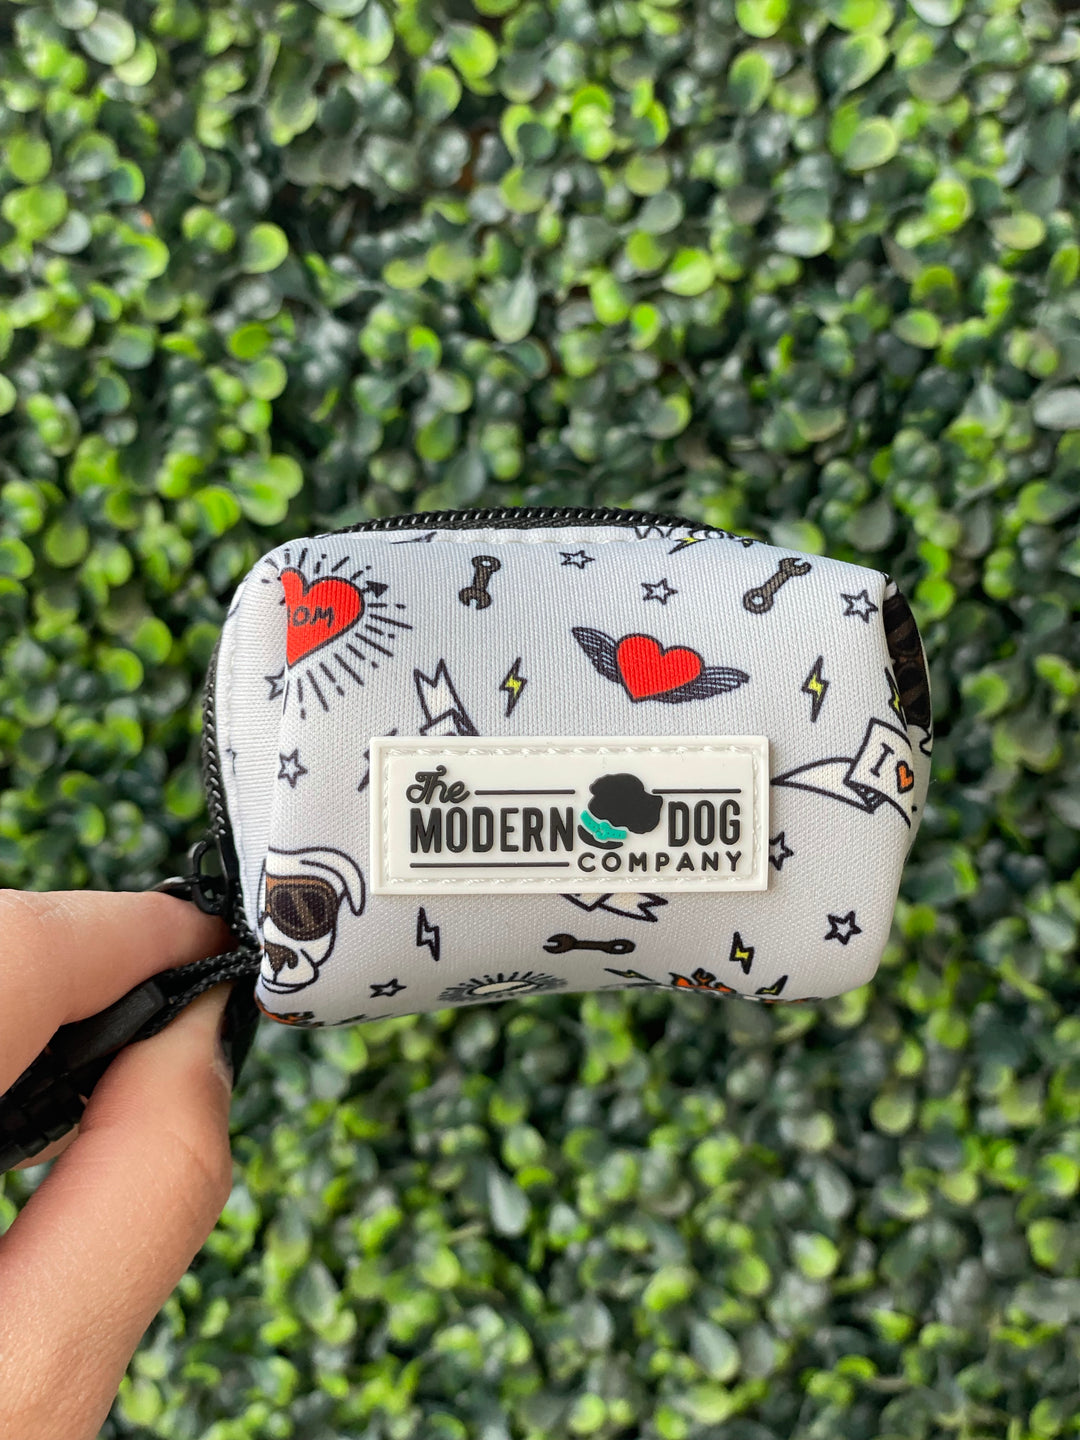 The Modern Dog Company - Bad to the Bone Poop Bag Holder